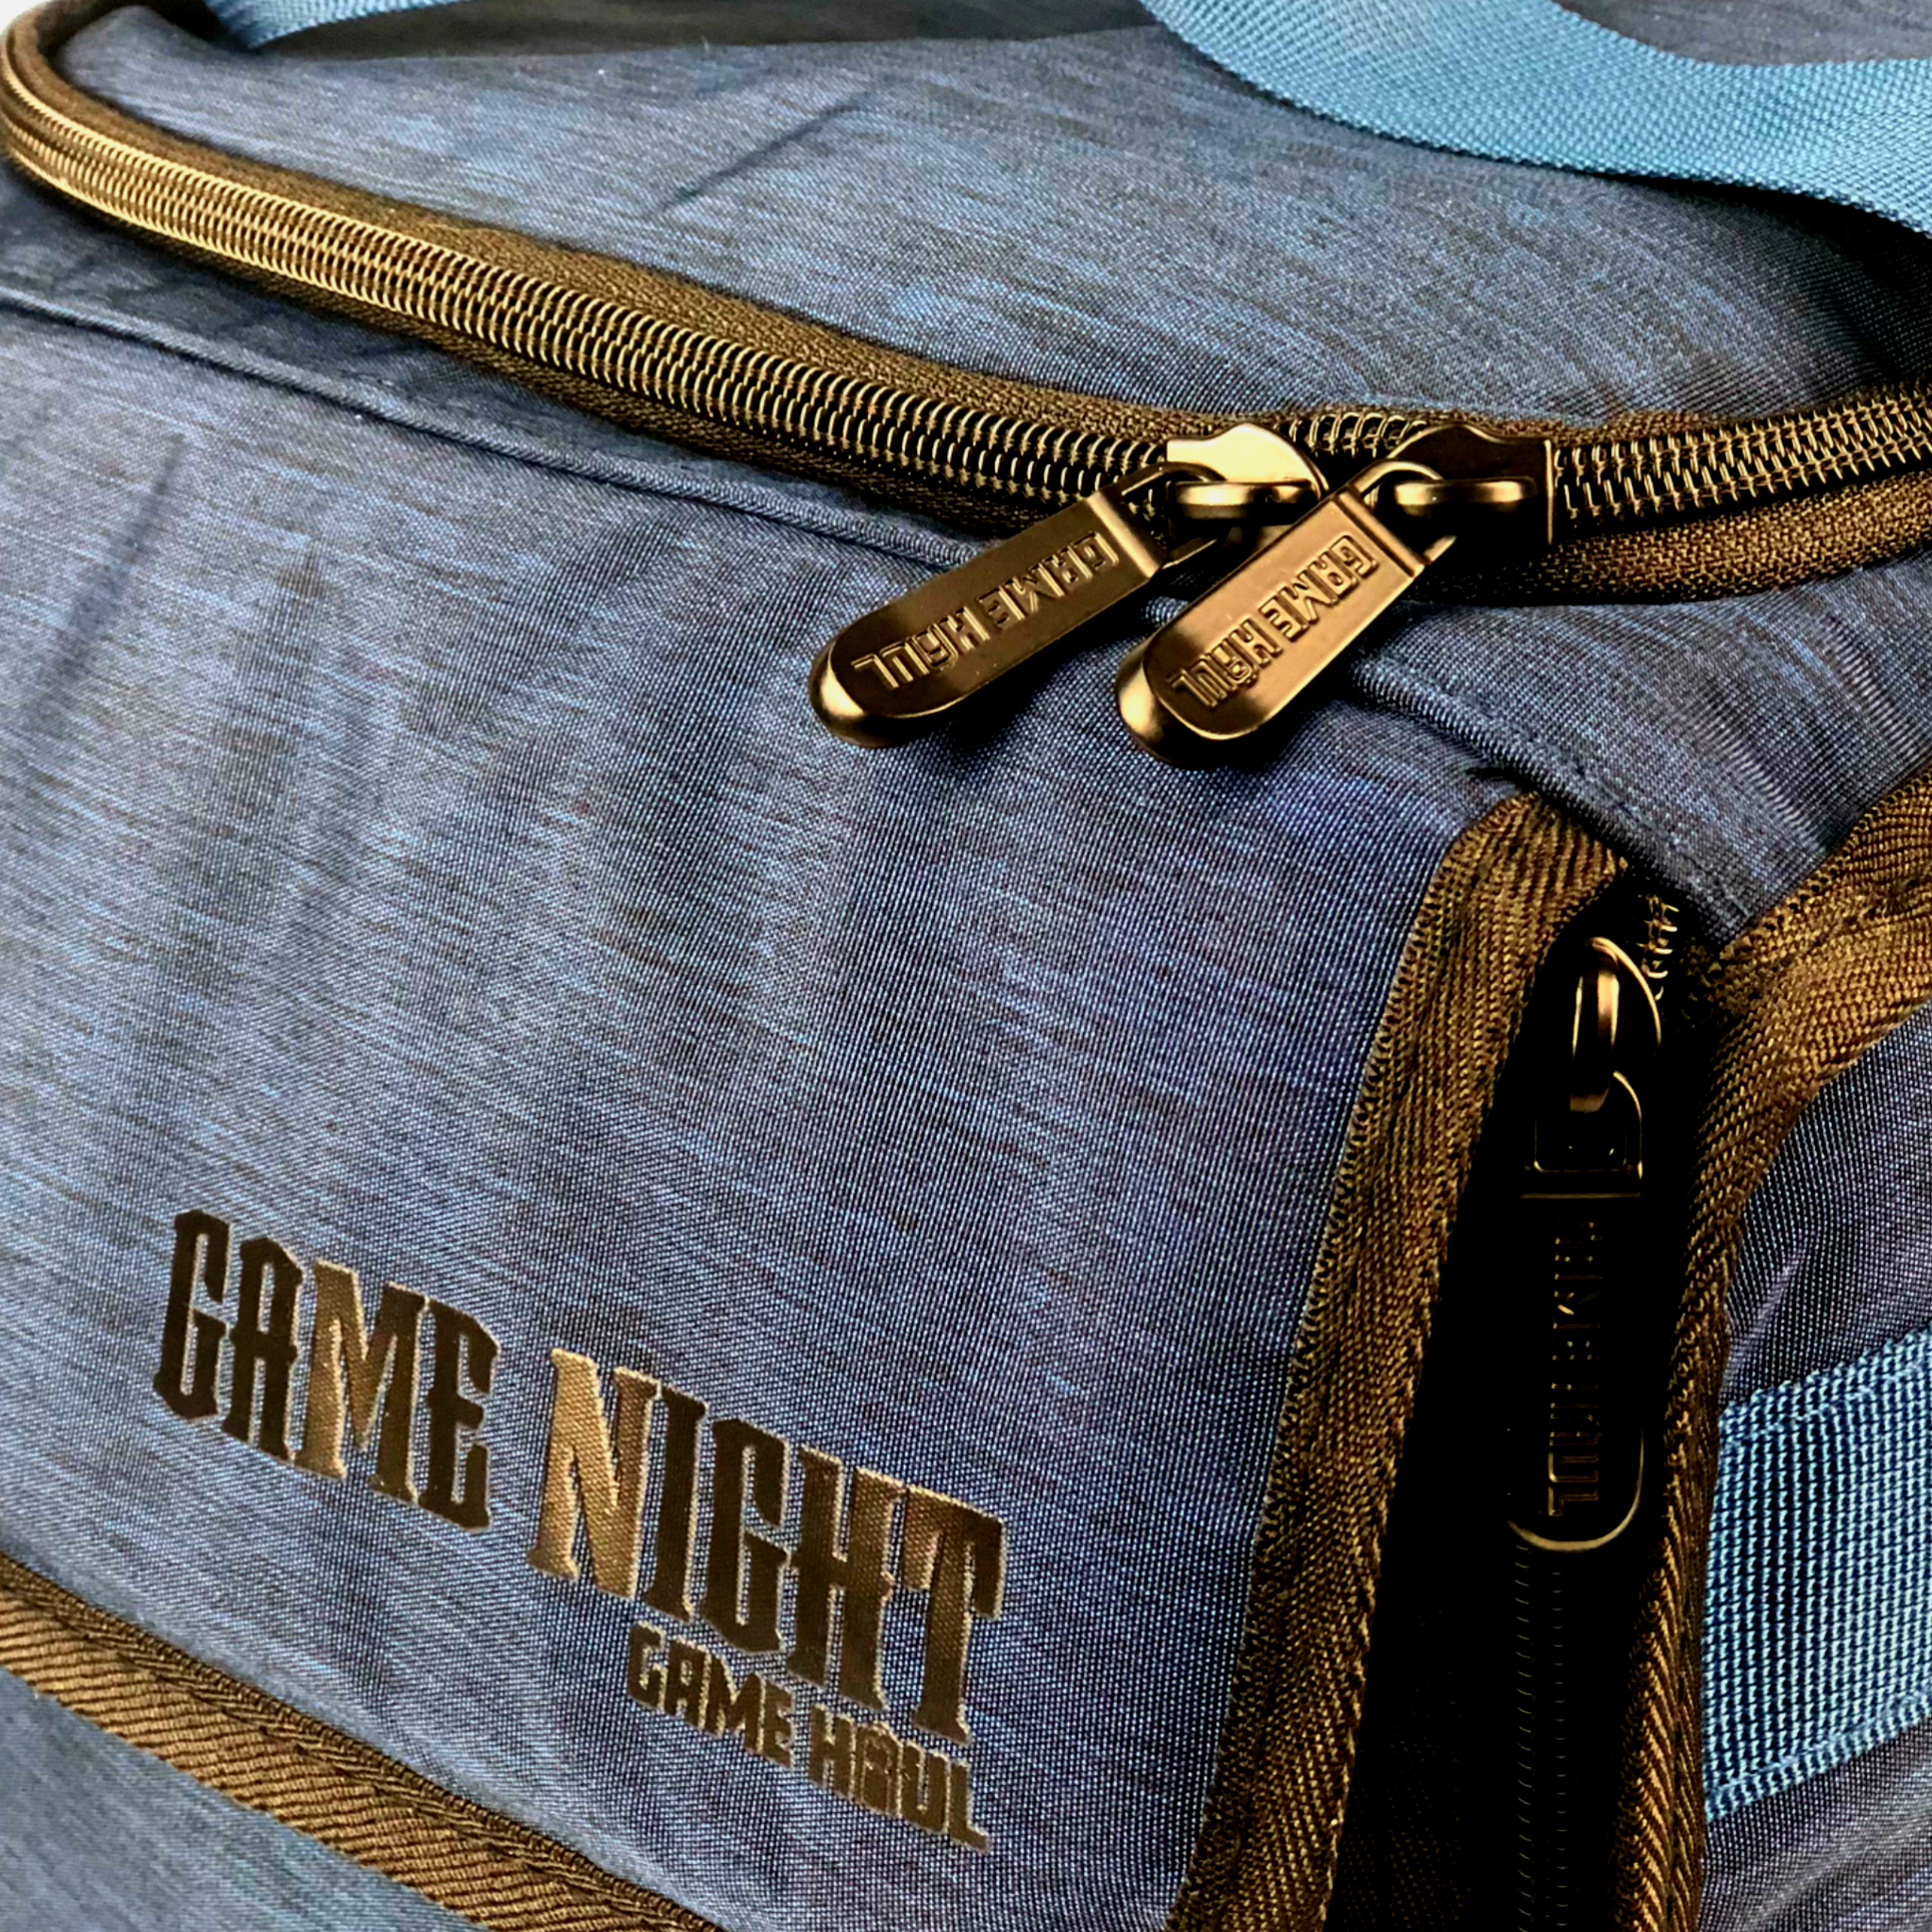 Game Night Bag: Evenfall Blue